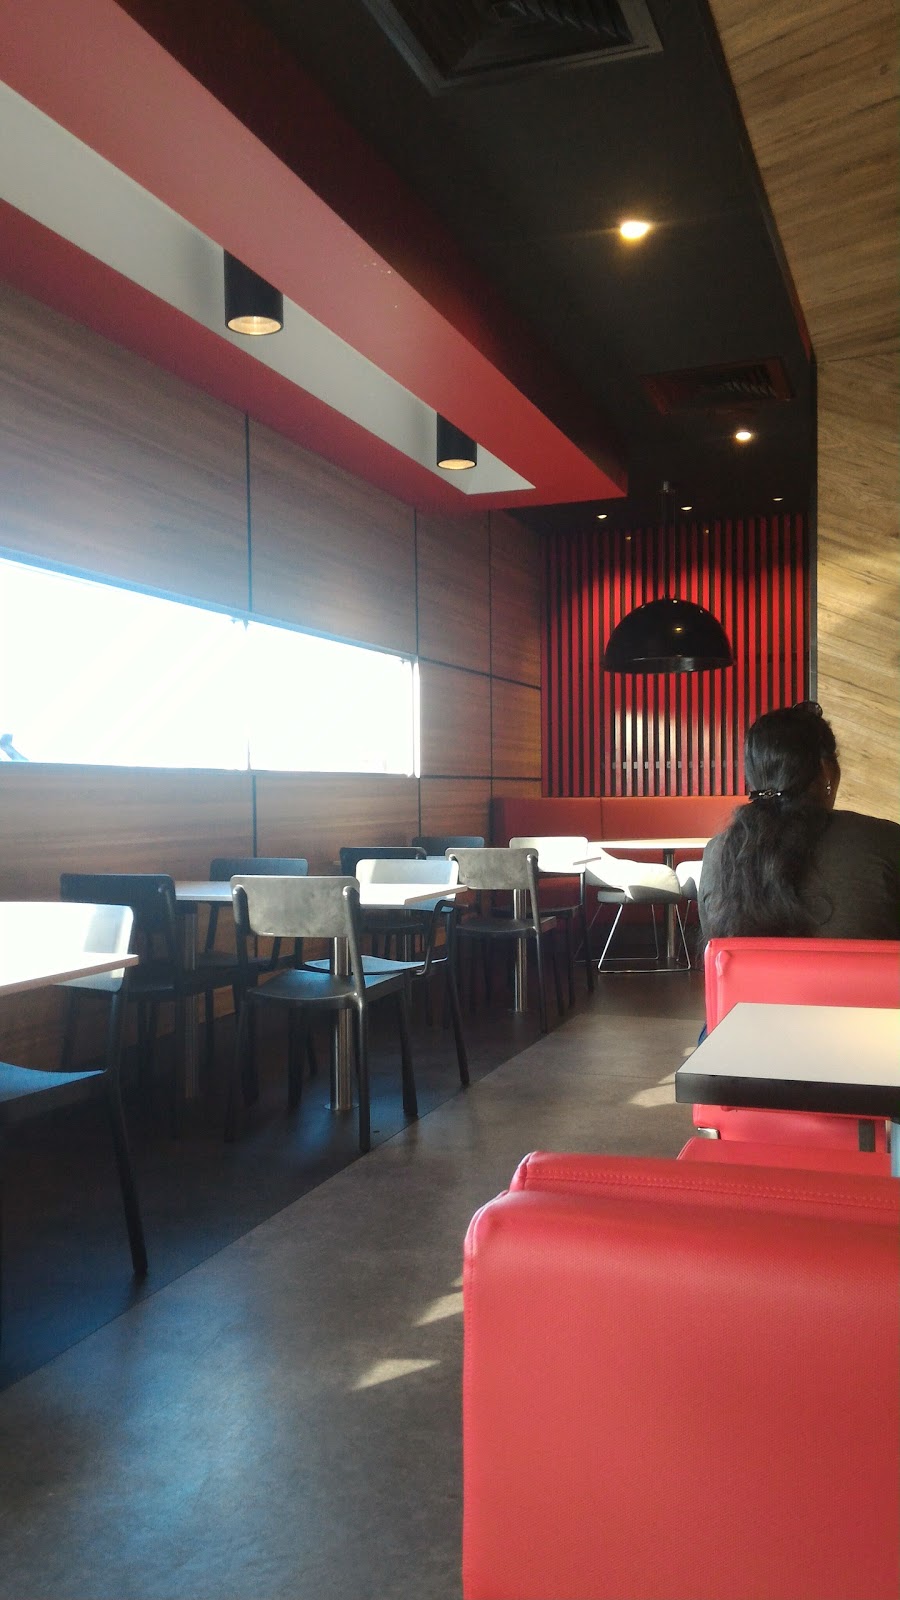 KFC Redbank Plains | meal takeaway | 389 Redbank Plains Rd, Redbank Plains QLD 4301, Australia | 0738145574 OR +61 7 3814 5574